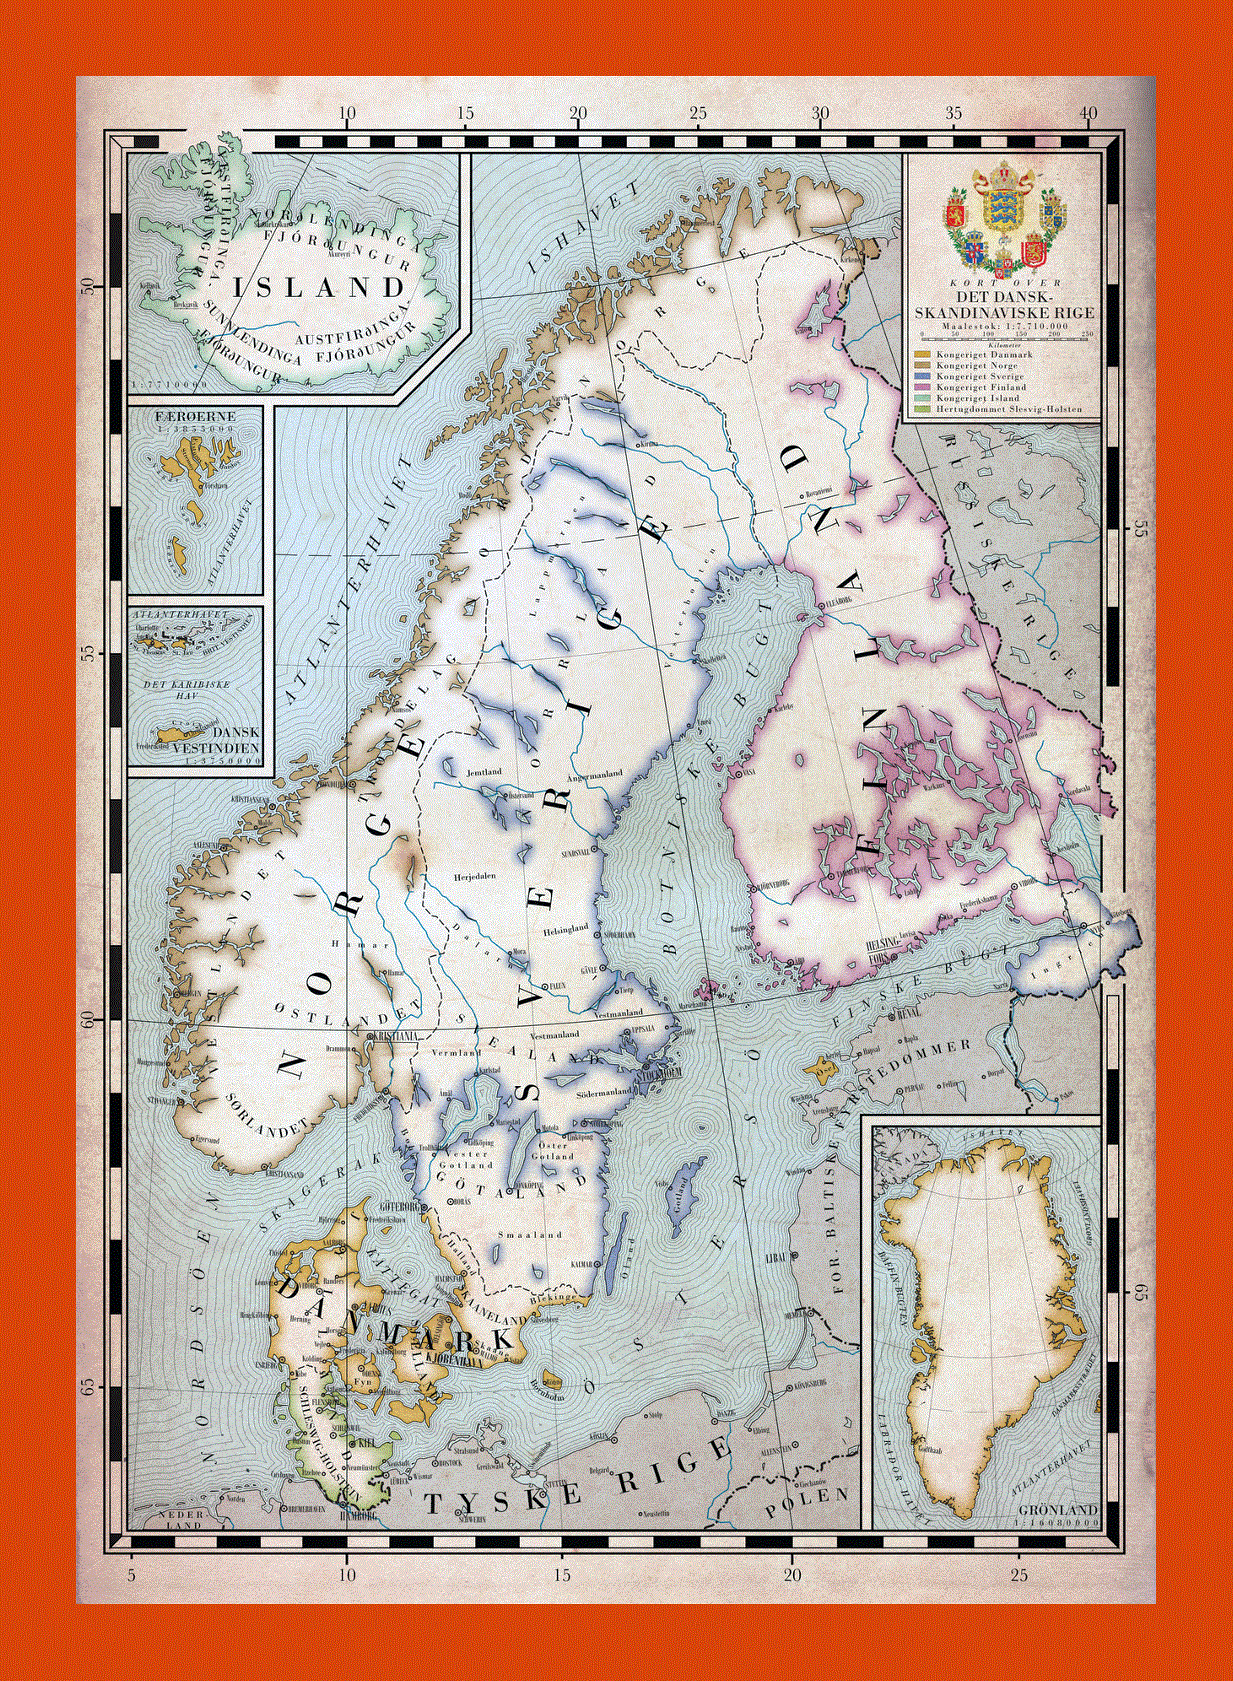 Old map of Scandinavia